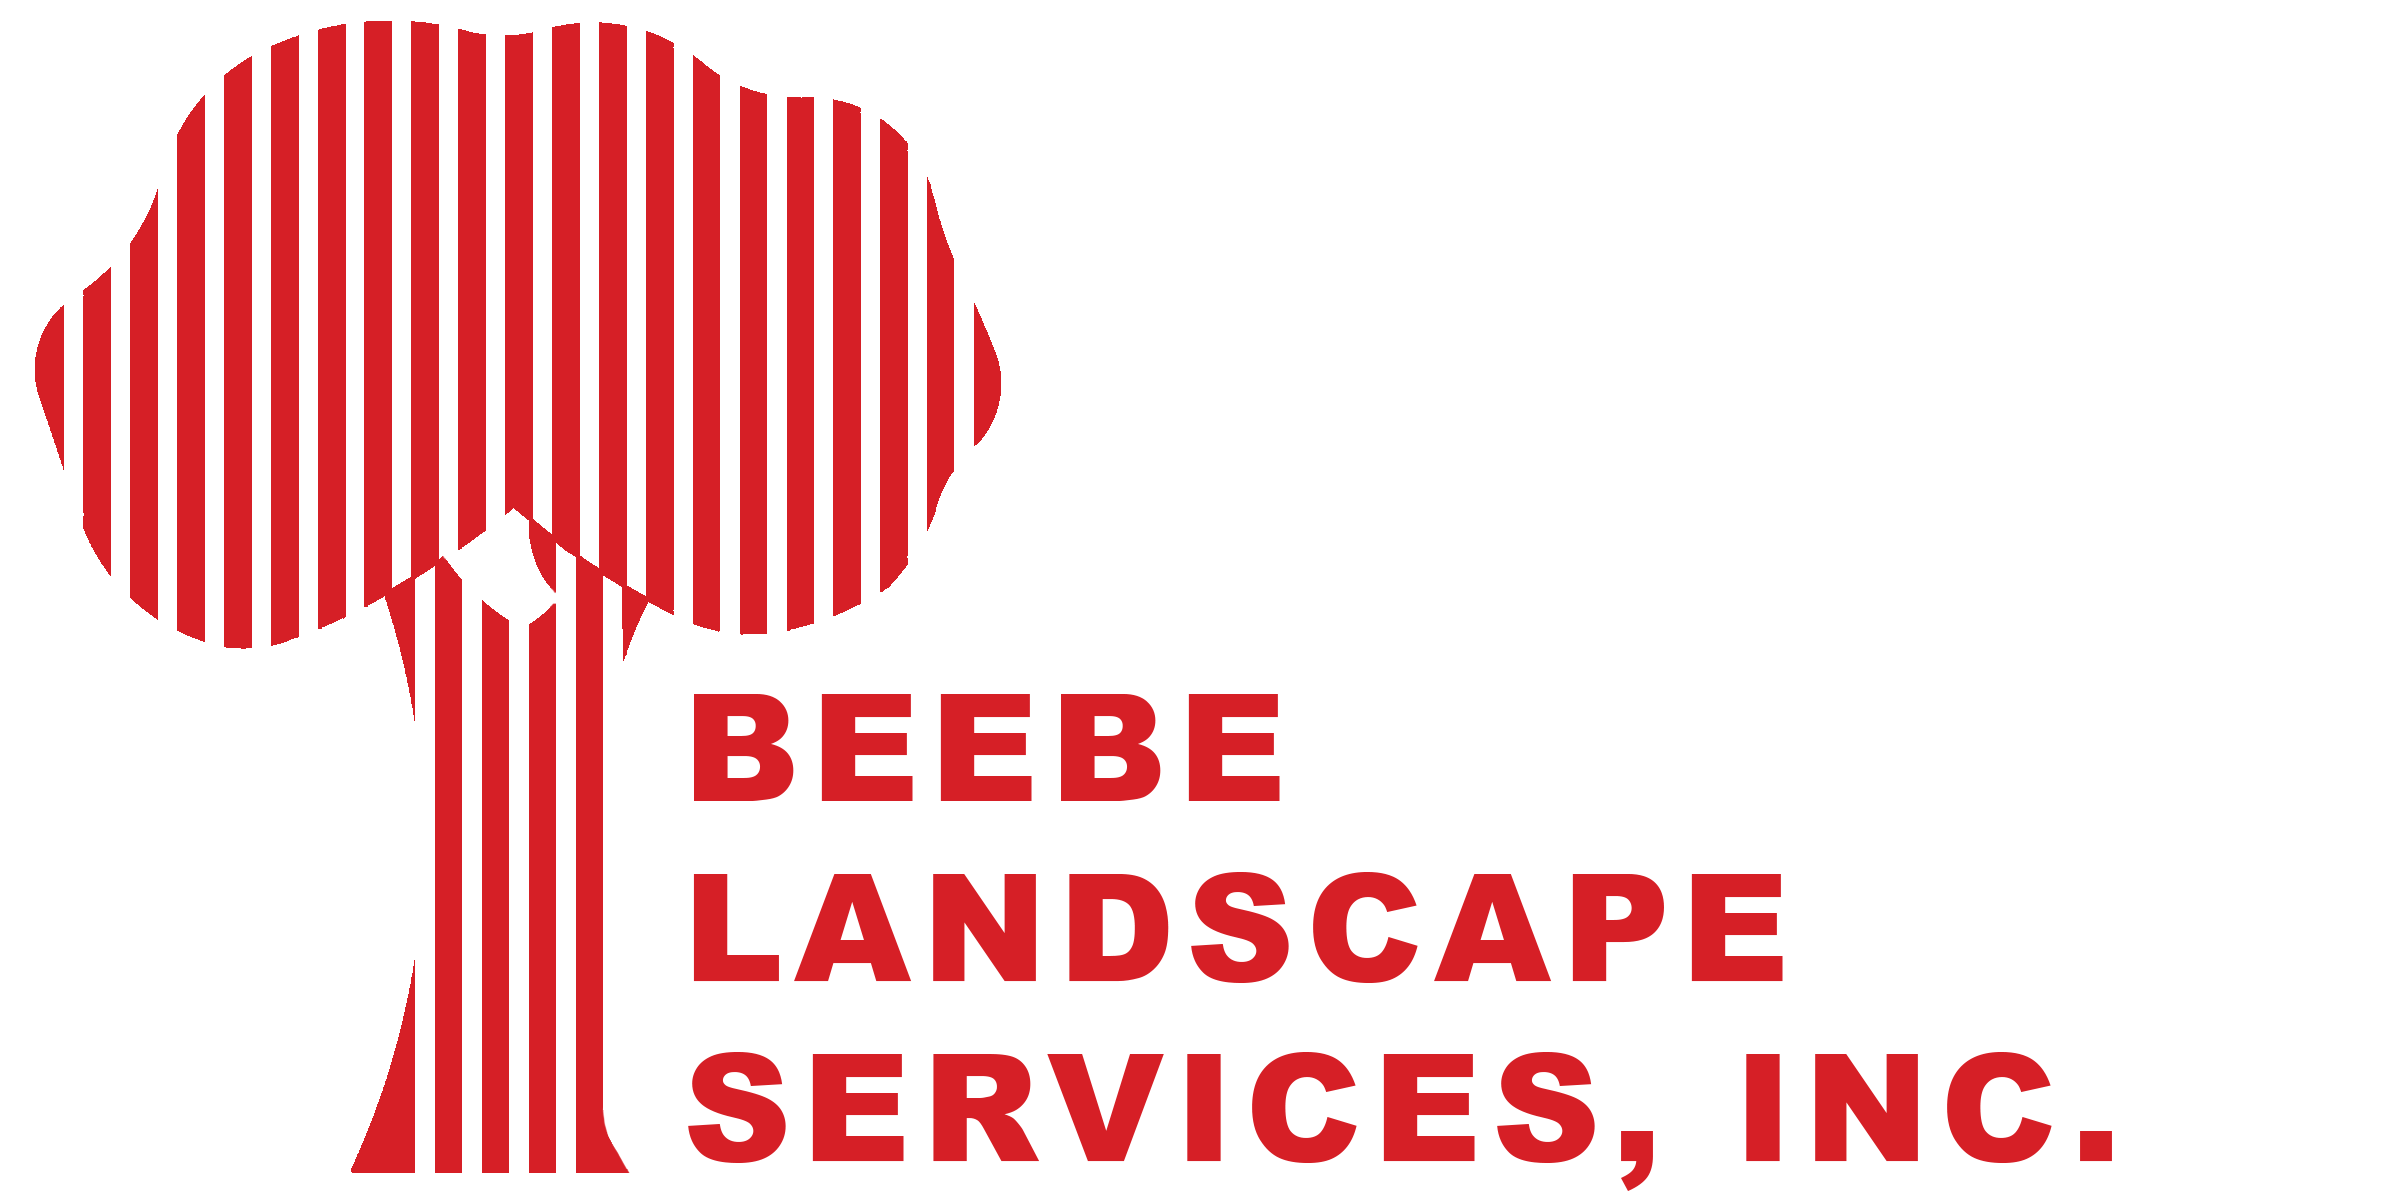 Beebe Landscape Services, Inc.